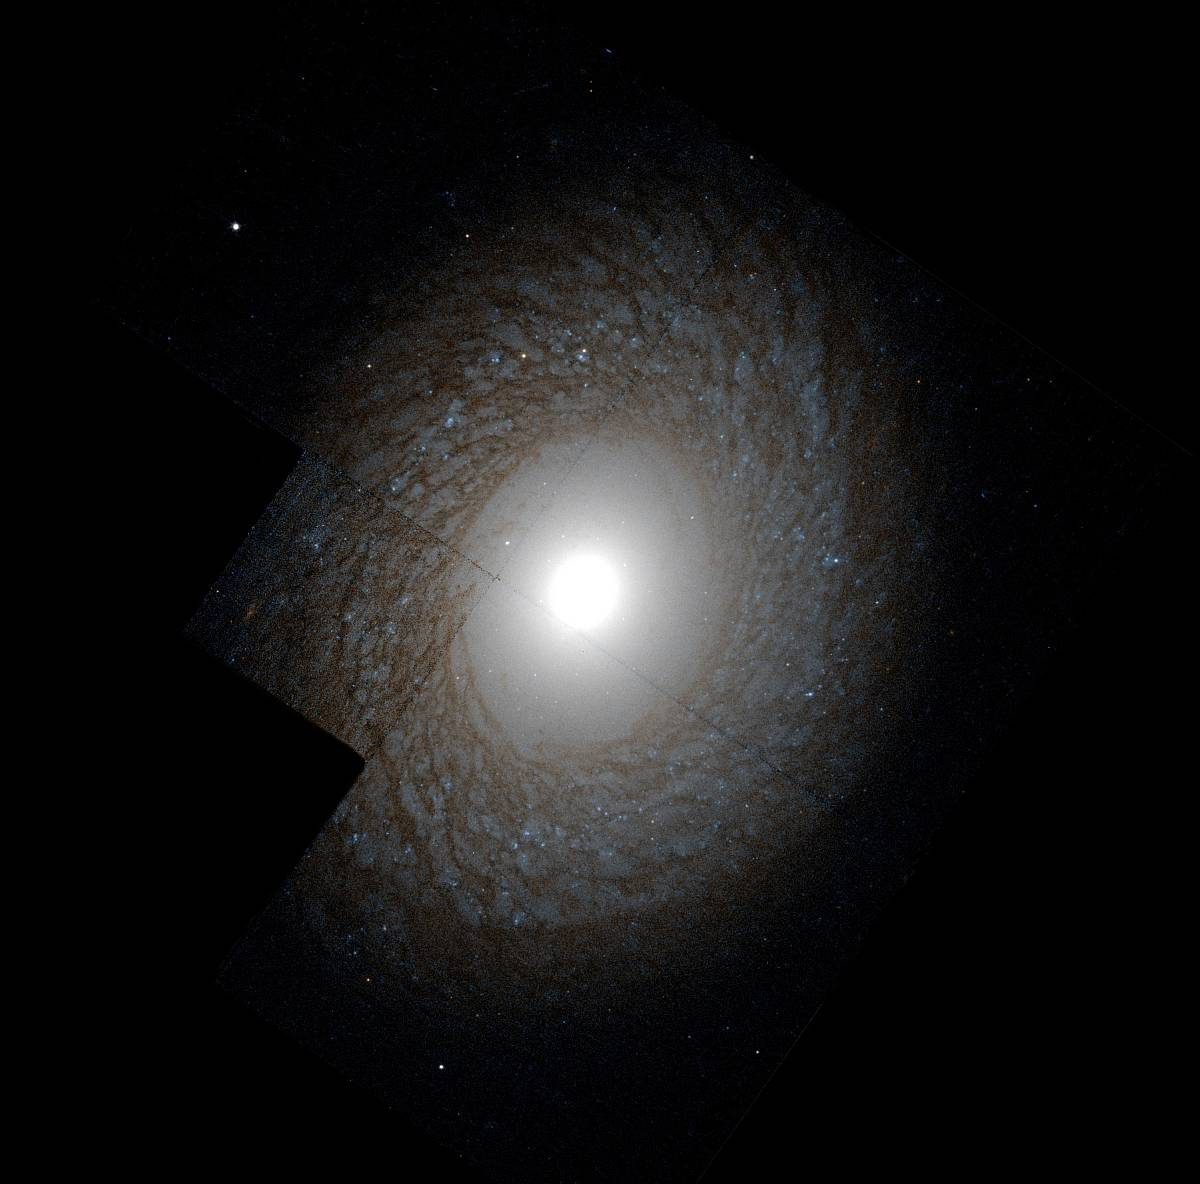 NGC 2775 - galaxie de la constellation du Cancer